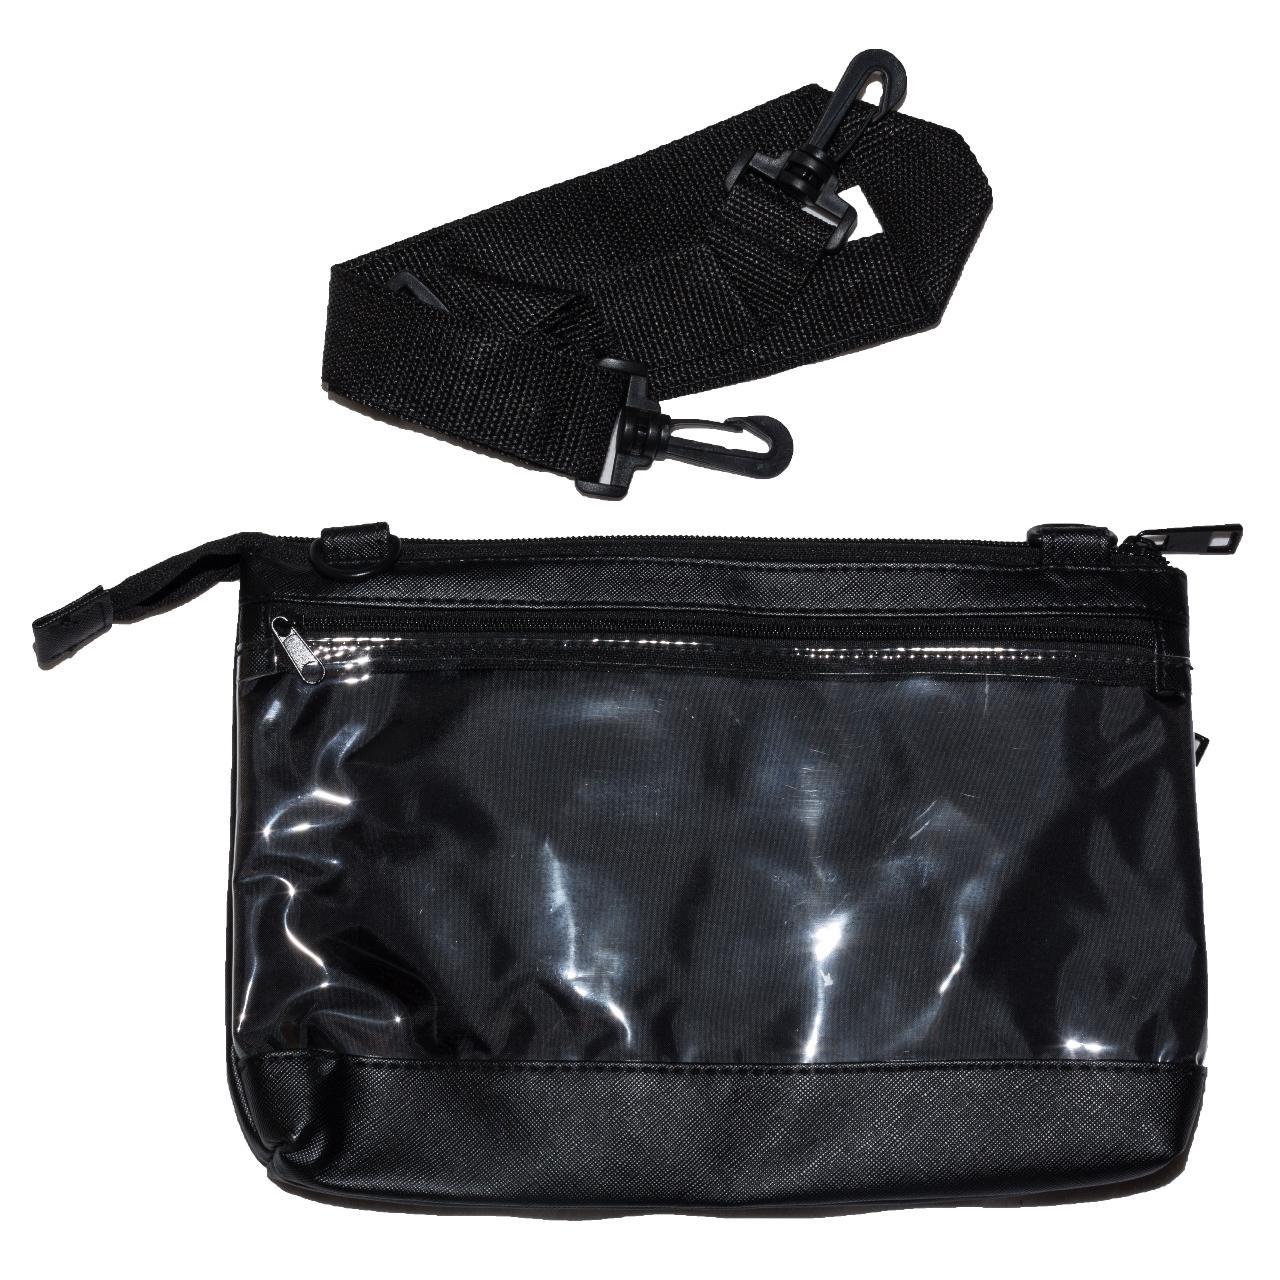 Jam Home Made, Black Slip Style Shoulder Bag, with a